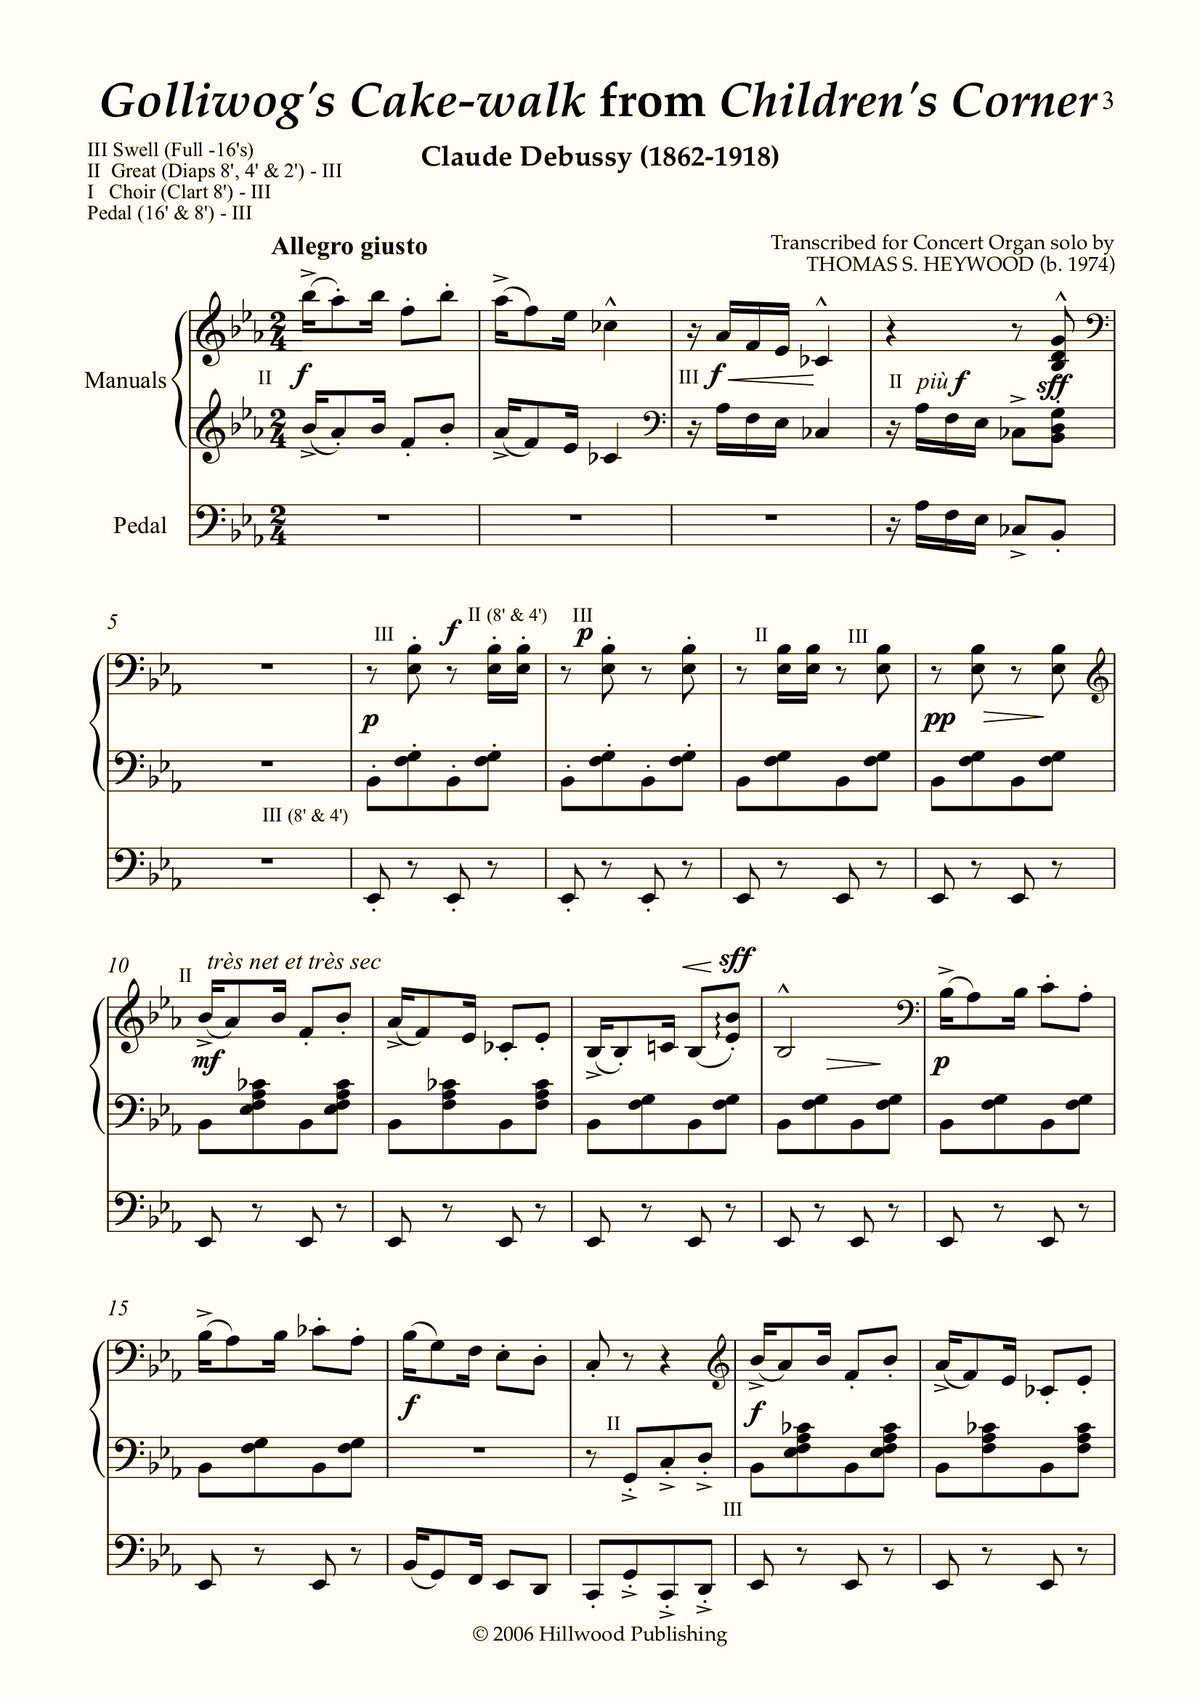 Debussy/Heywood - Golliwog's Cake-walk from Children's Corner (Score) - Concert Organ International